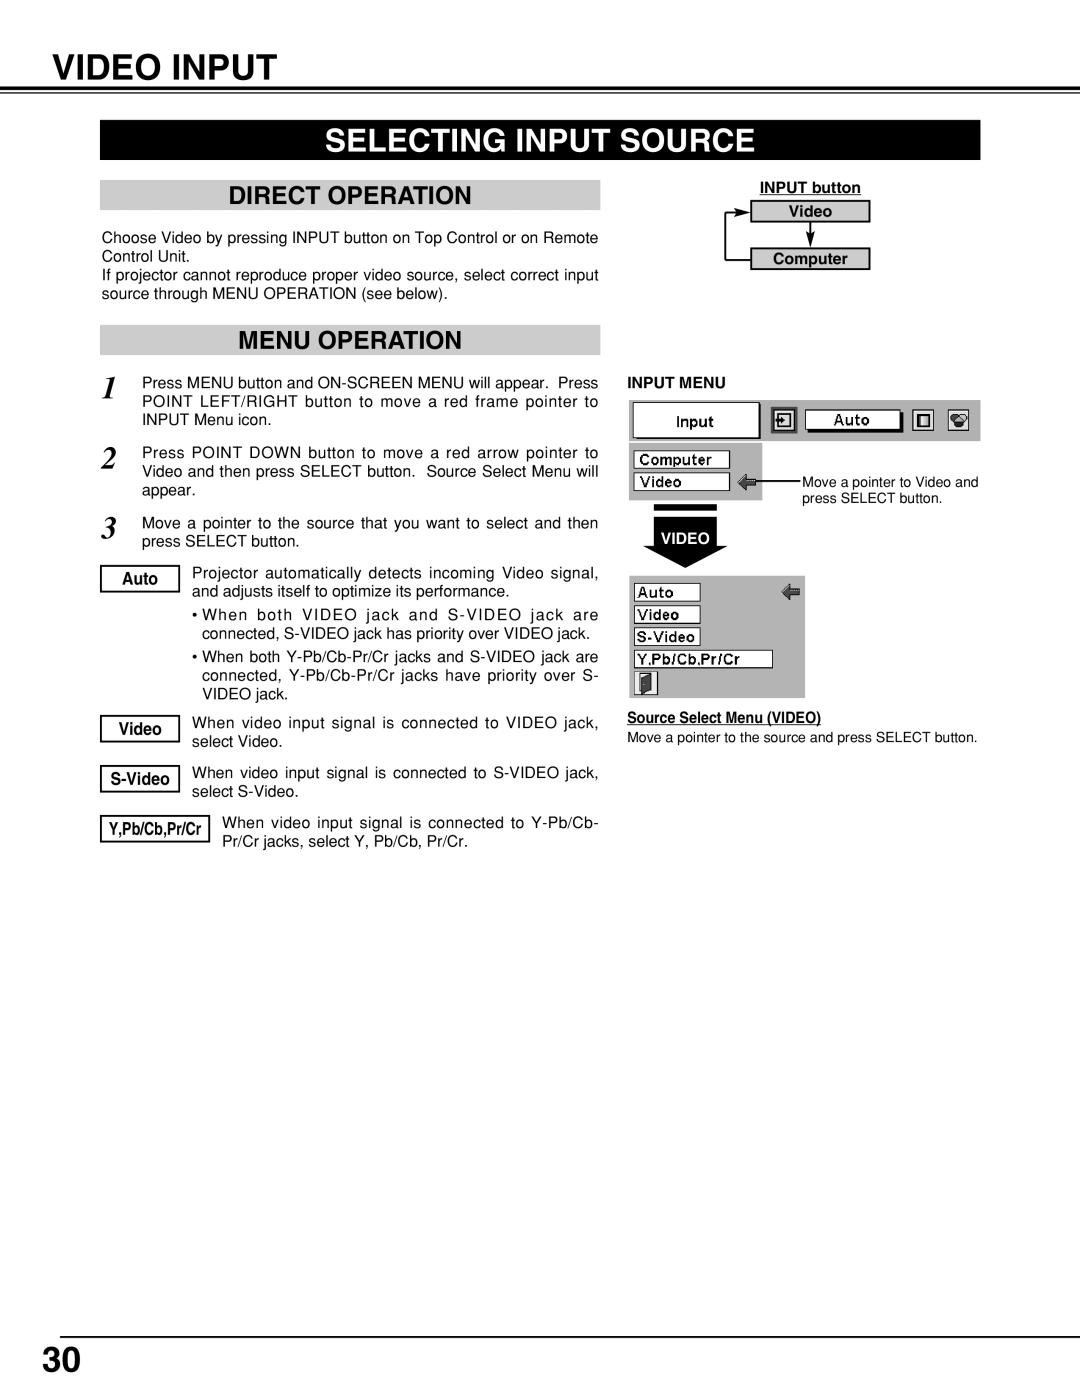 BOXLIGHT CP-306t manual Video Input, Selecting Input Source, Direct Operation, Menu Operation, INPUT button Video Computer 